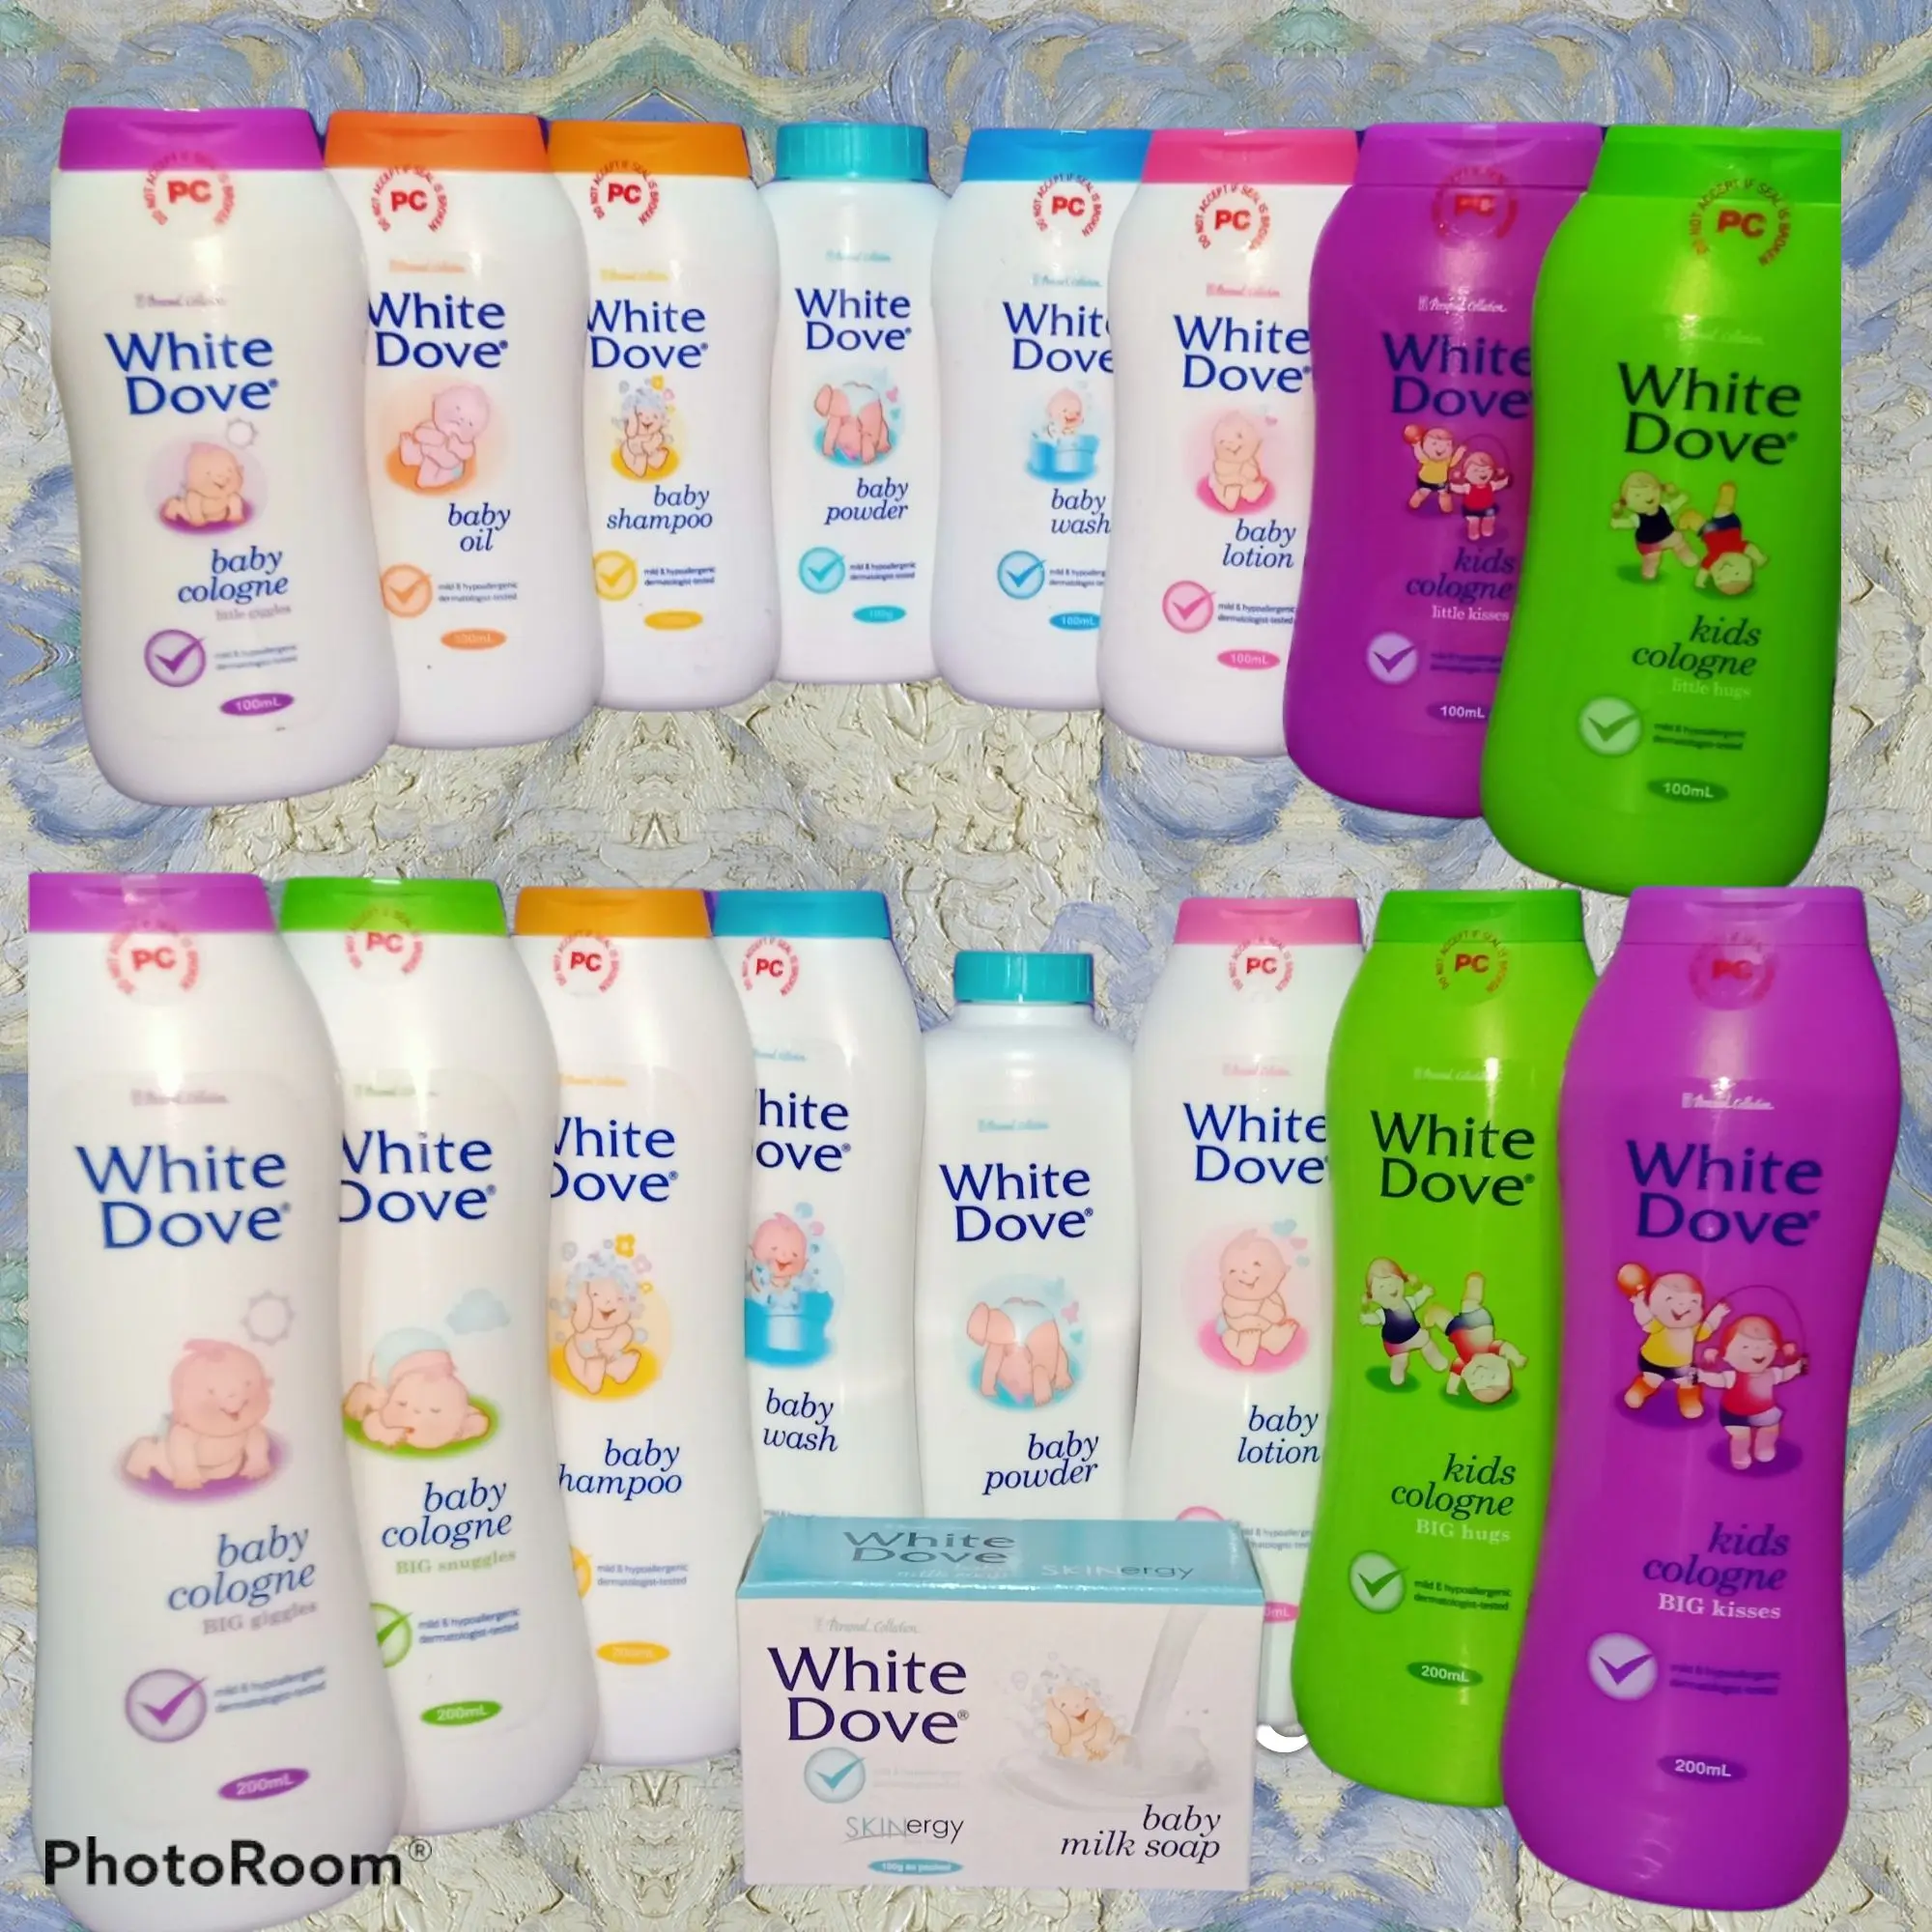 White Dove kids cologne,baby cologne,wash, shampoo, powder,bath soap,baby oil, lotion